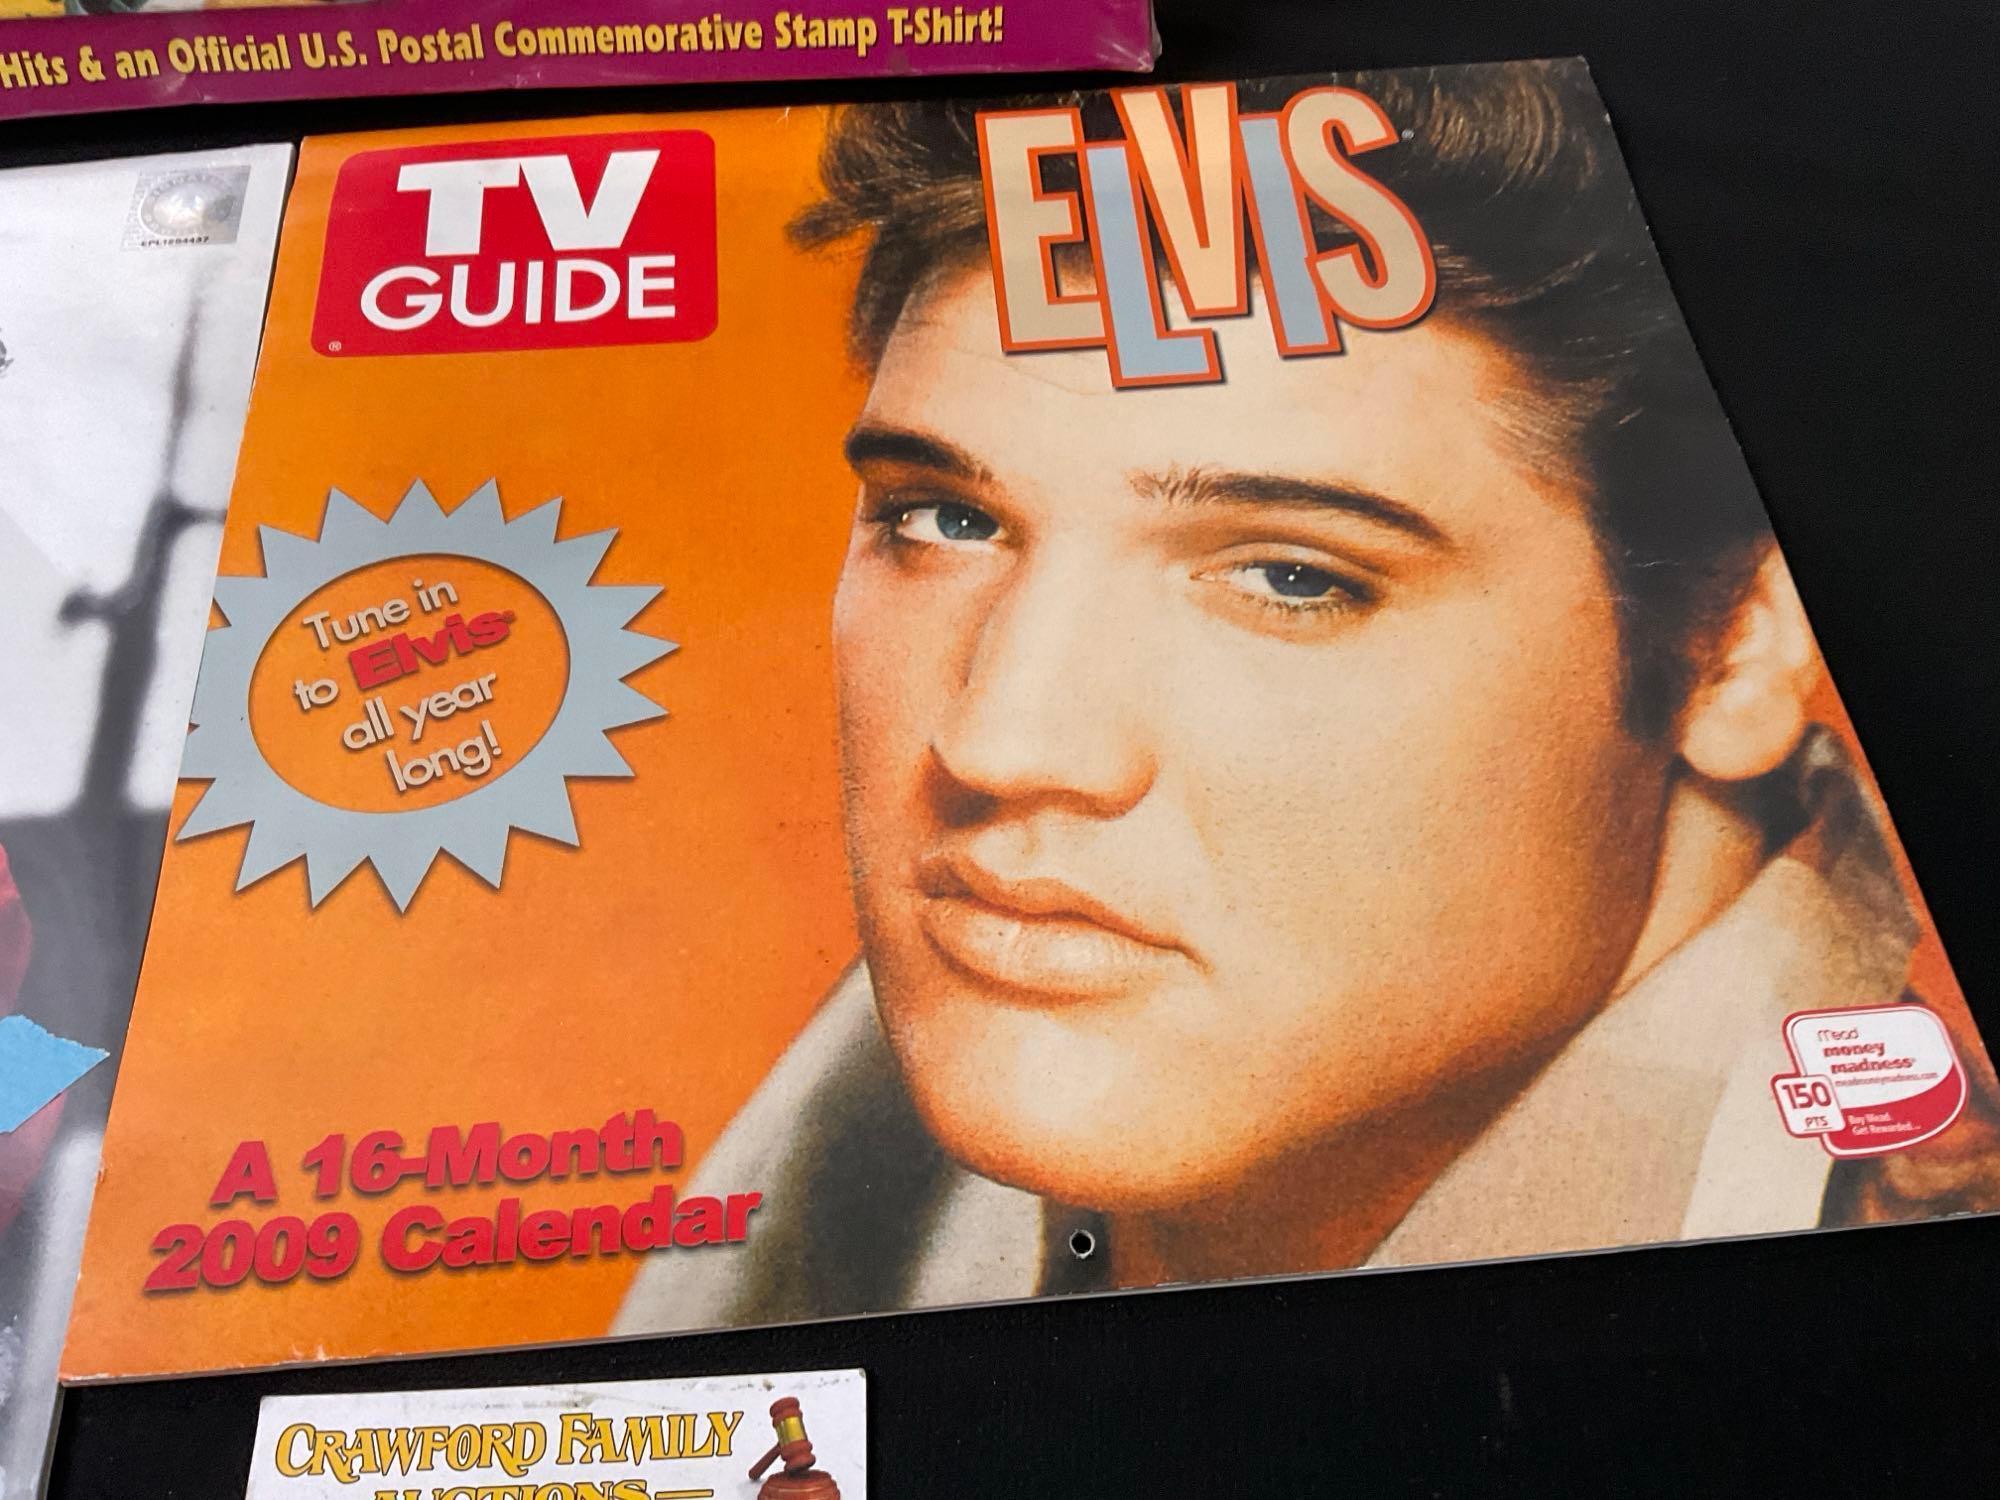 Pair of Elvis Presley Calendars 2009 & 2016, and Elvis T-Shirt & Audio Gift Pak, pair of cassettes